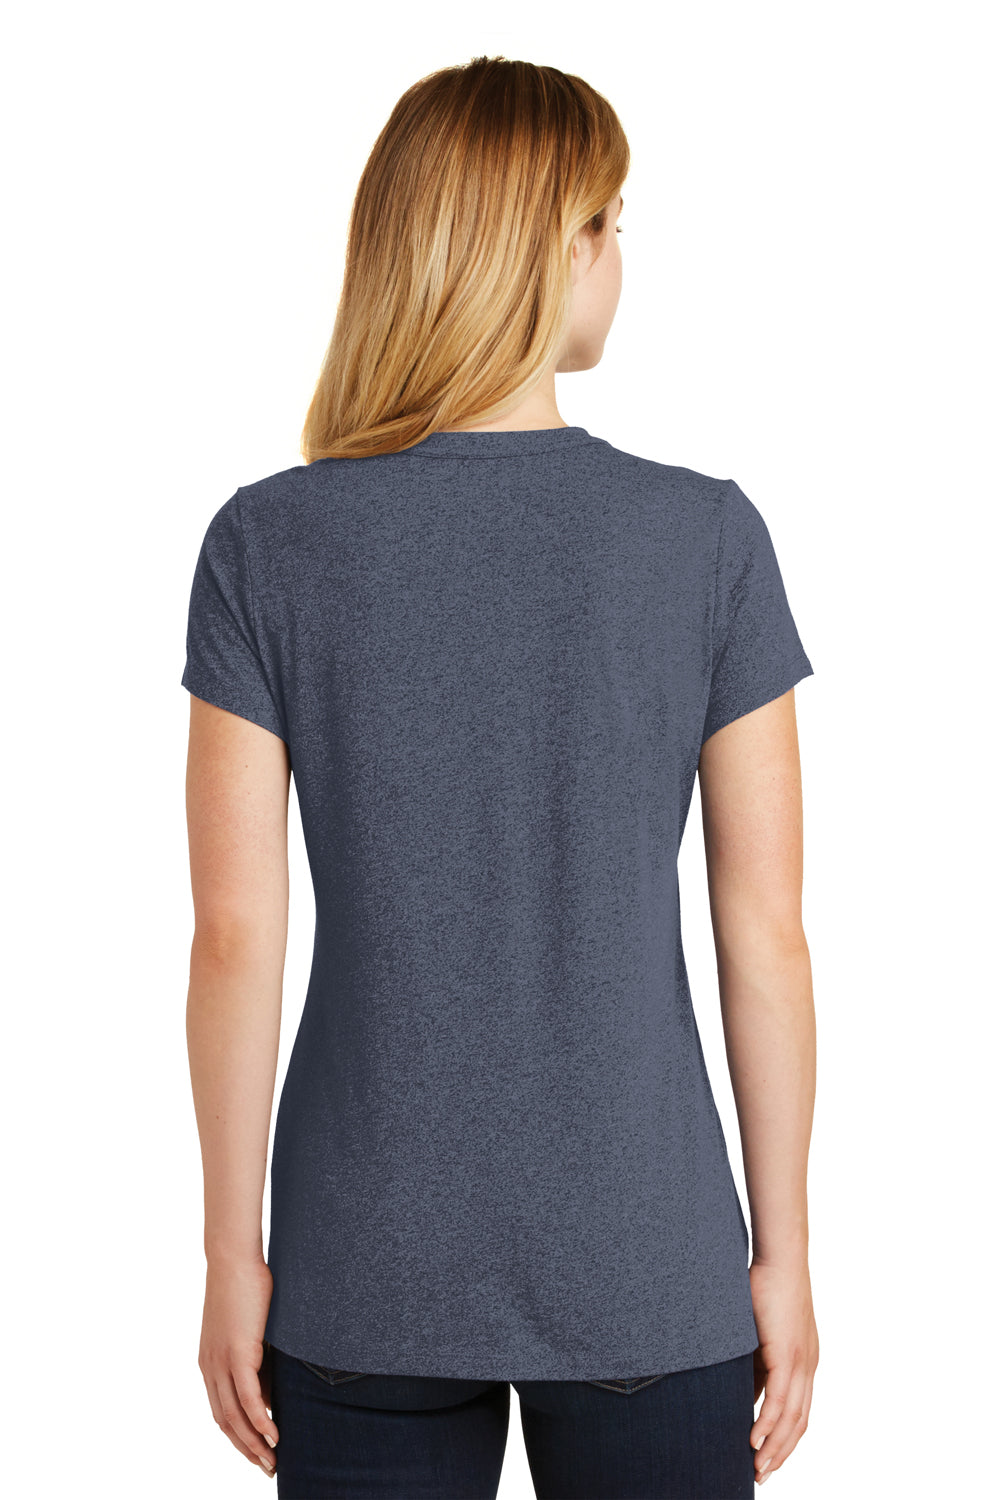 New Era LNEA100 Womens Heritage Short Sleeve Crewneck T-Shirt Heather Navy Blue Back